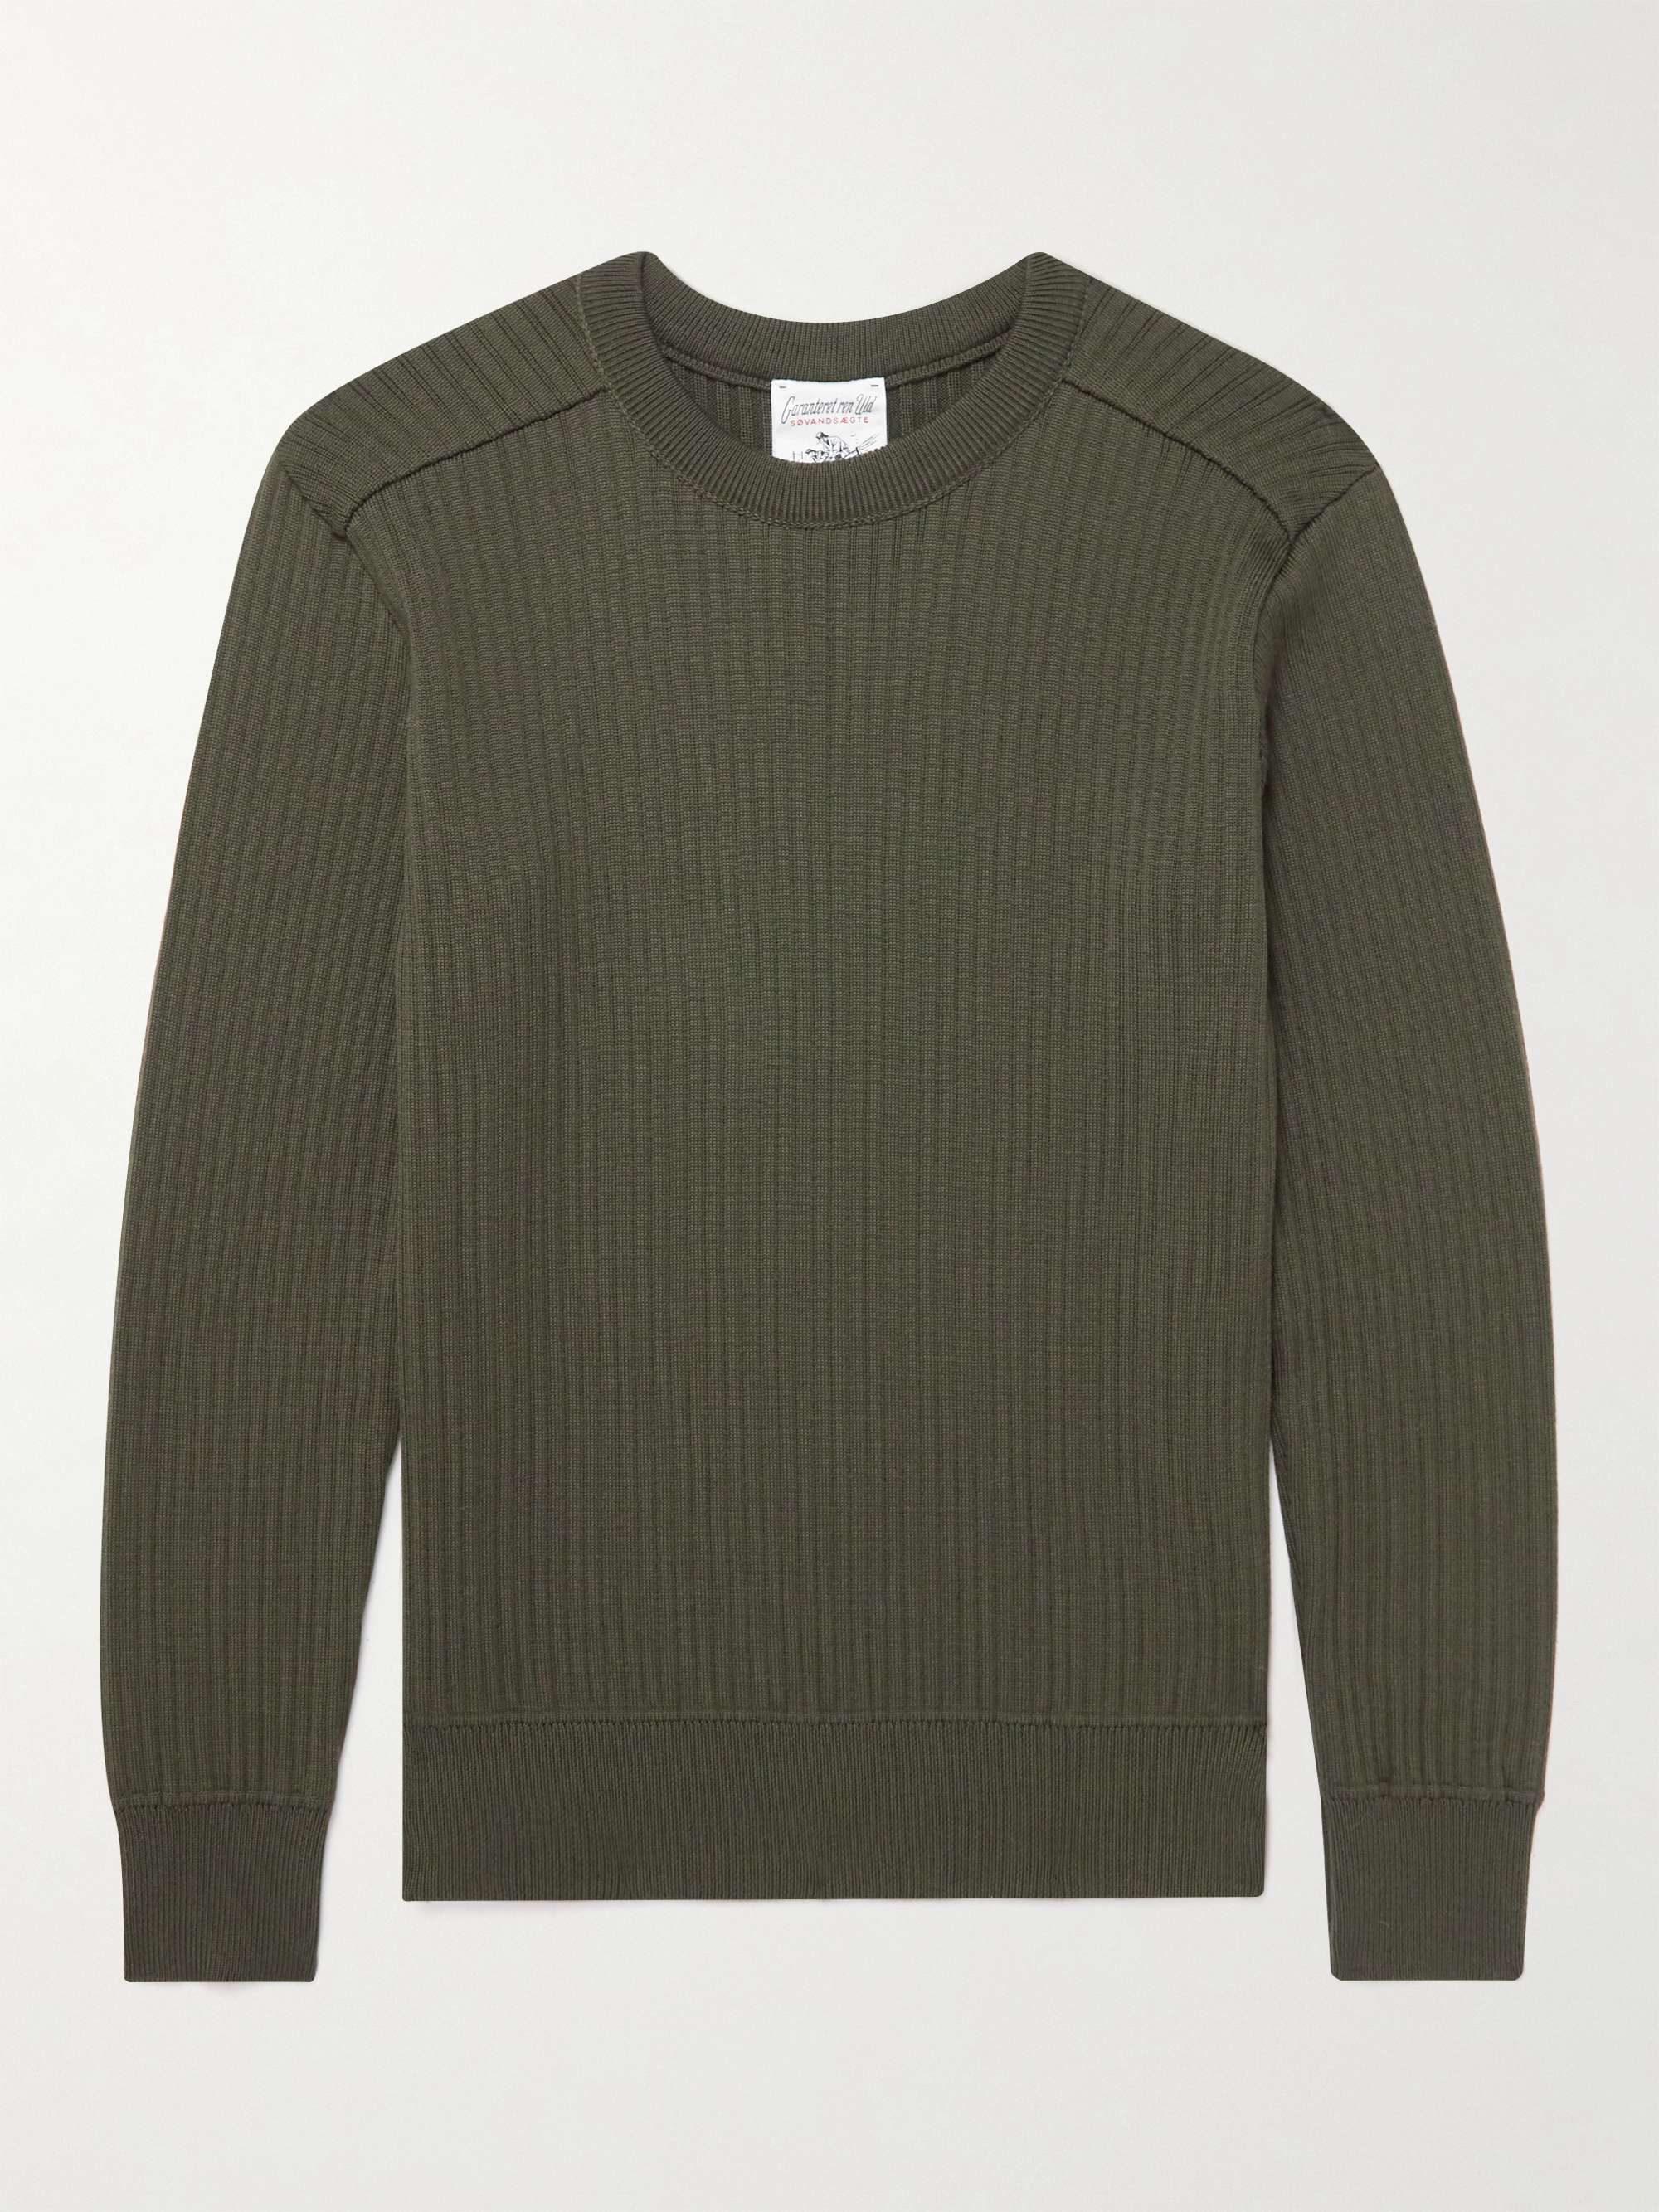 Green Defensor Ribbed Virgin Wool Sweater | S.N.S. HERNING | MR PORTER